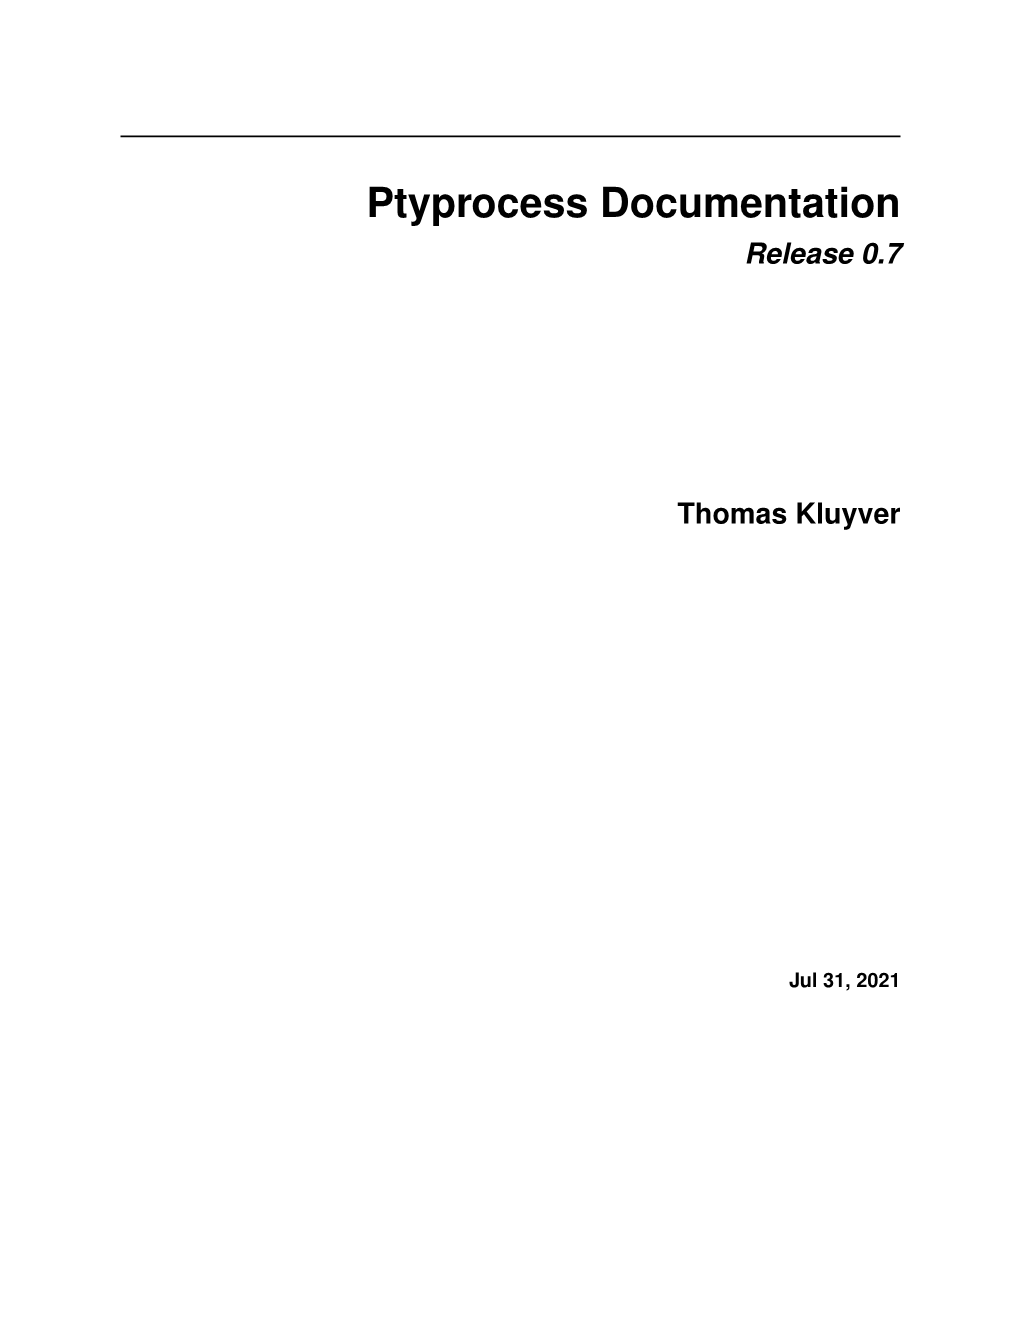 Ptyprocess Documentation Release 0.7